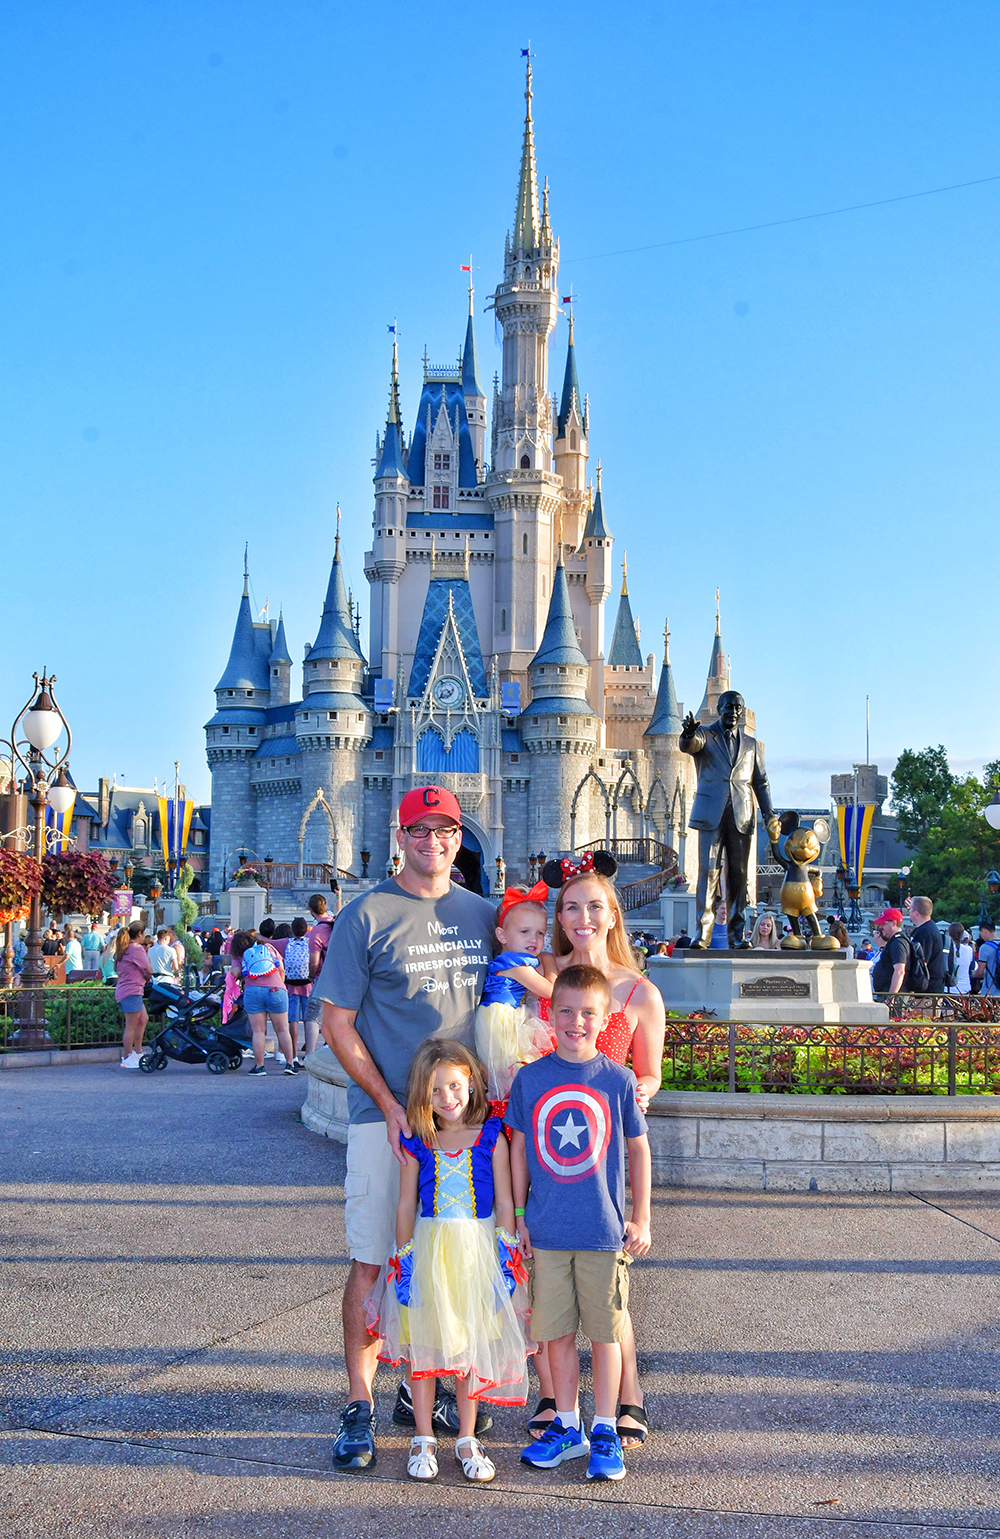 Mickey Mouse Craft Ideas: [Easy] Disney Park Ticket Keepsake - A Country  Girl's Life